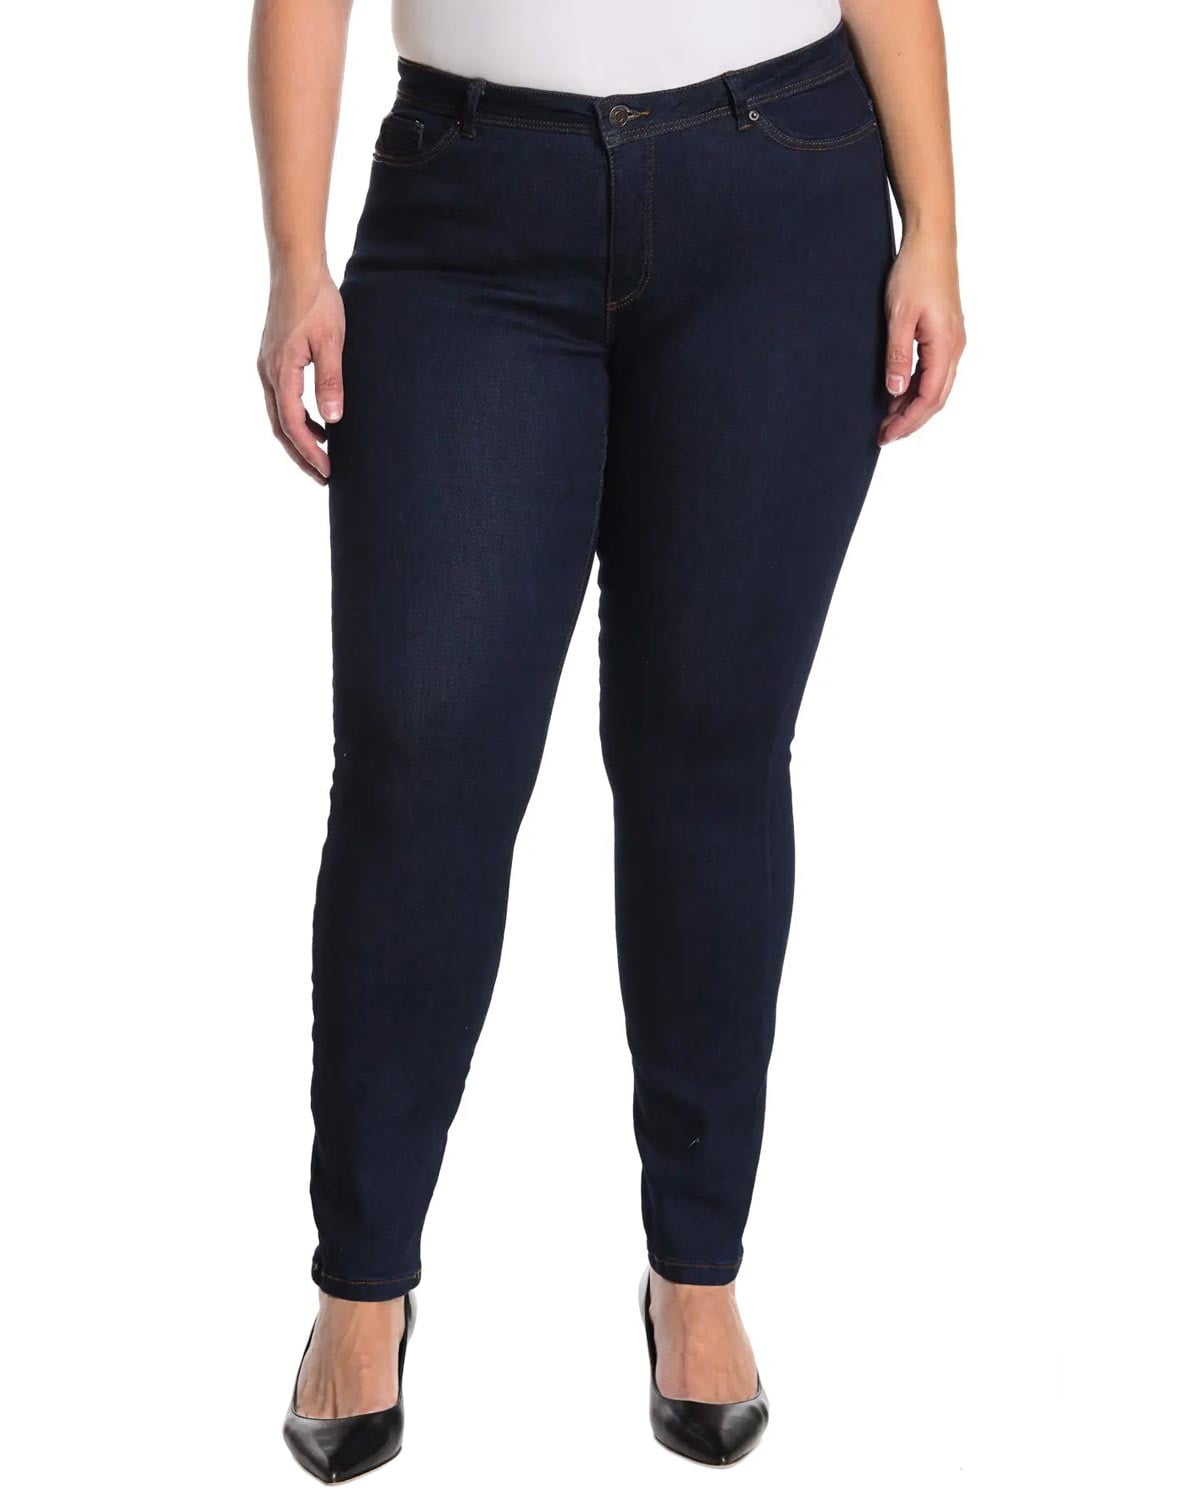 Moda Womens Manya Slim Fit Jeans 16 Dark Blue EU 48 - Walmart.com